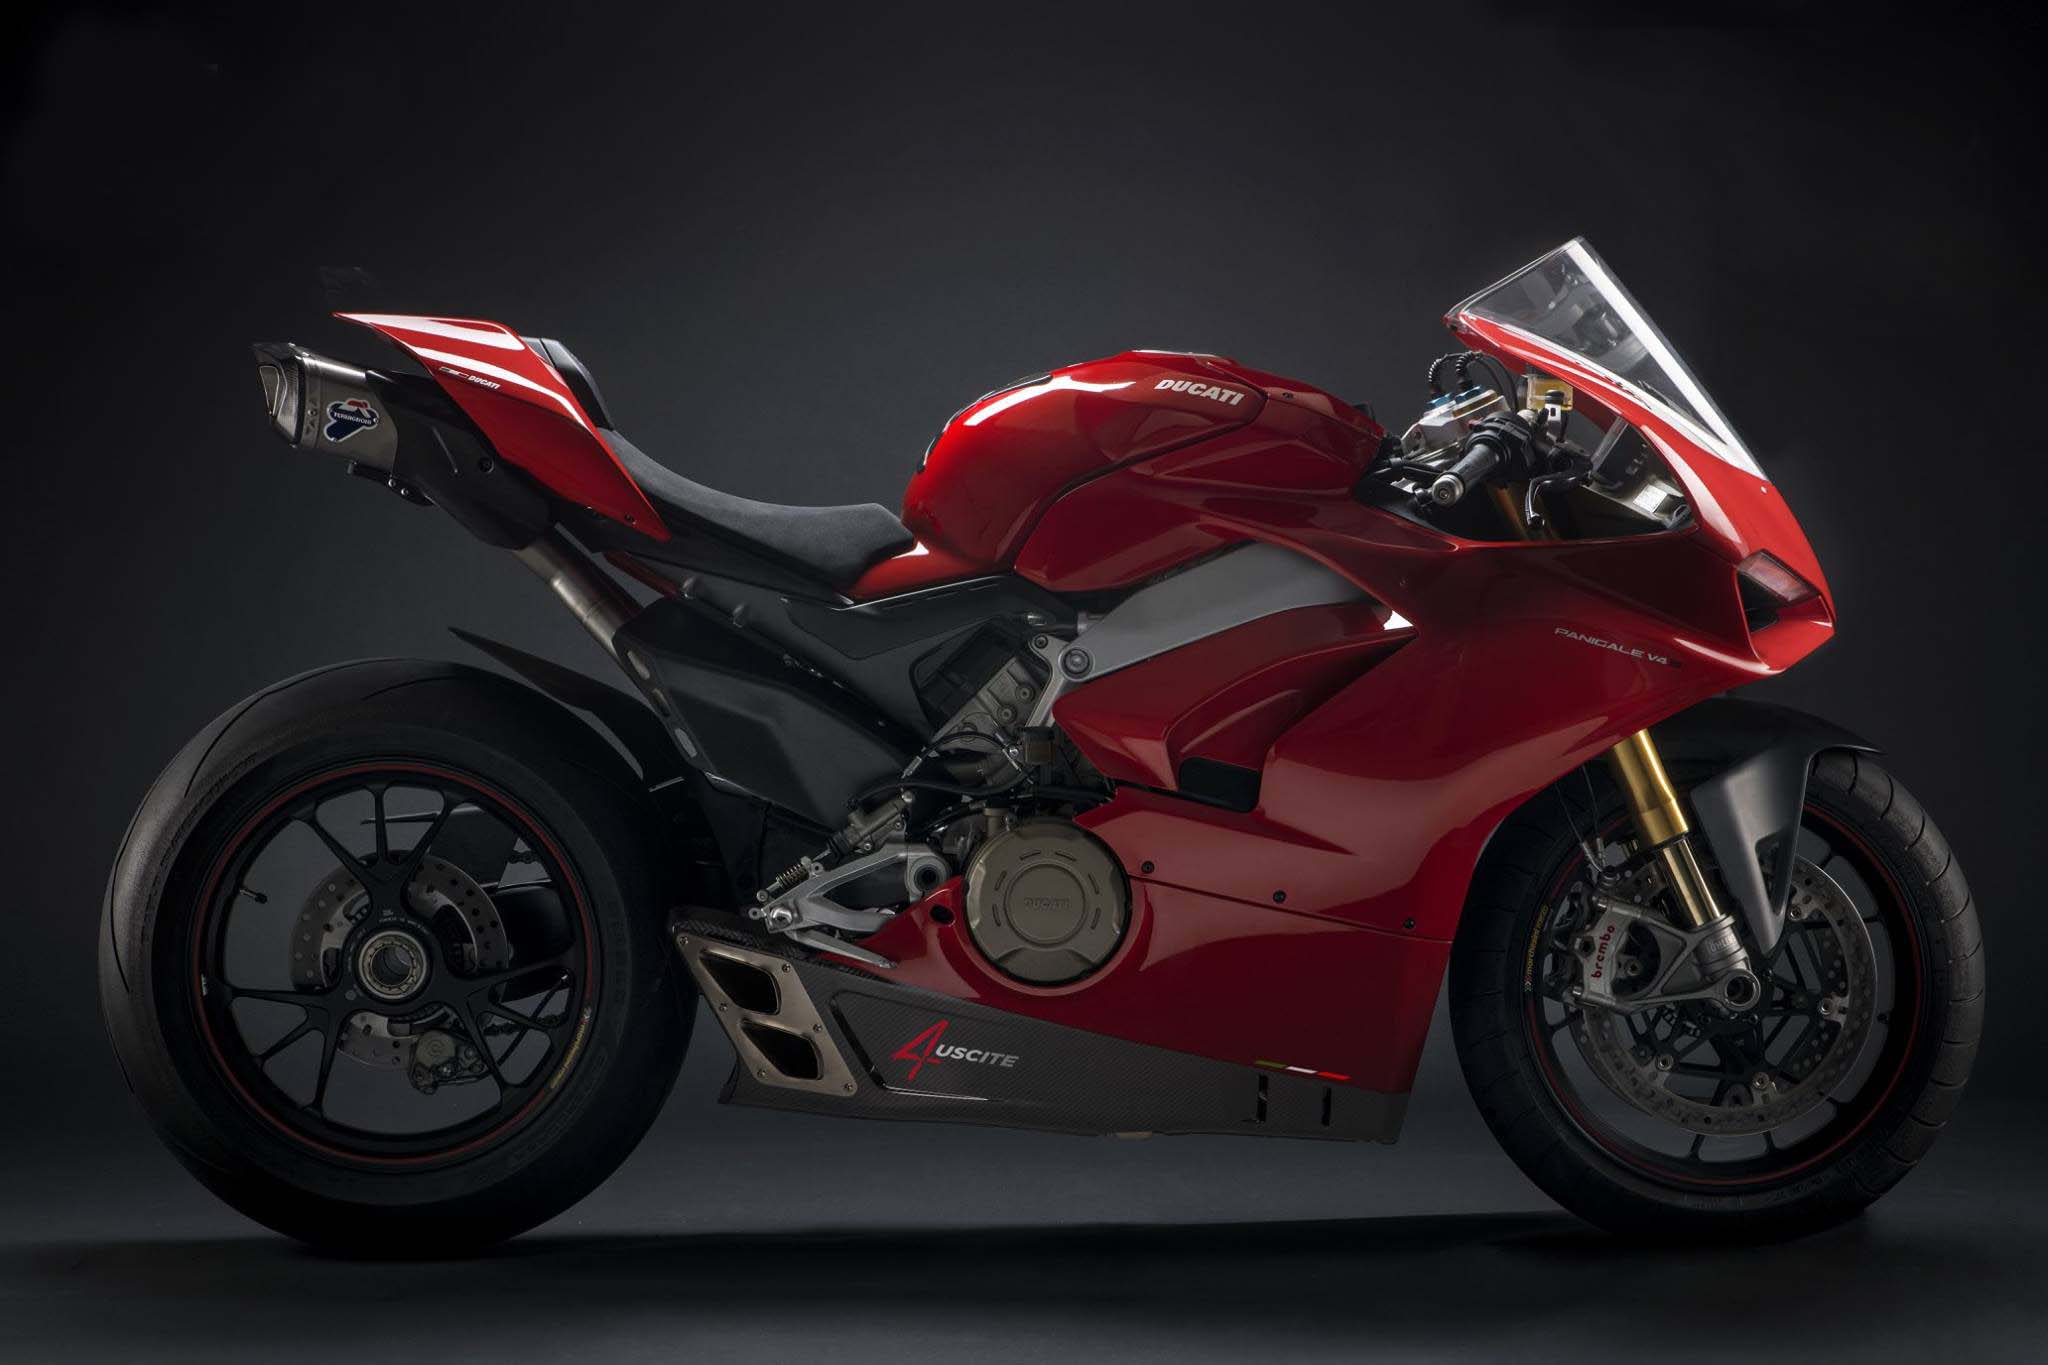 The Ducati Panigale V4 Looks Good Wearing Termignoni - Asphalt & Rubber